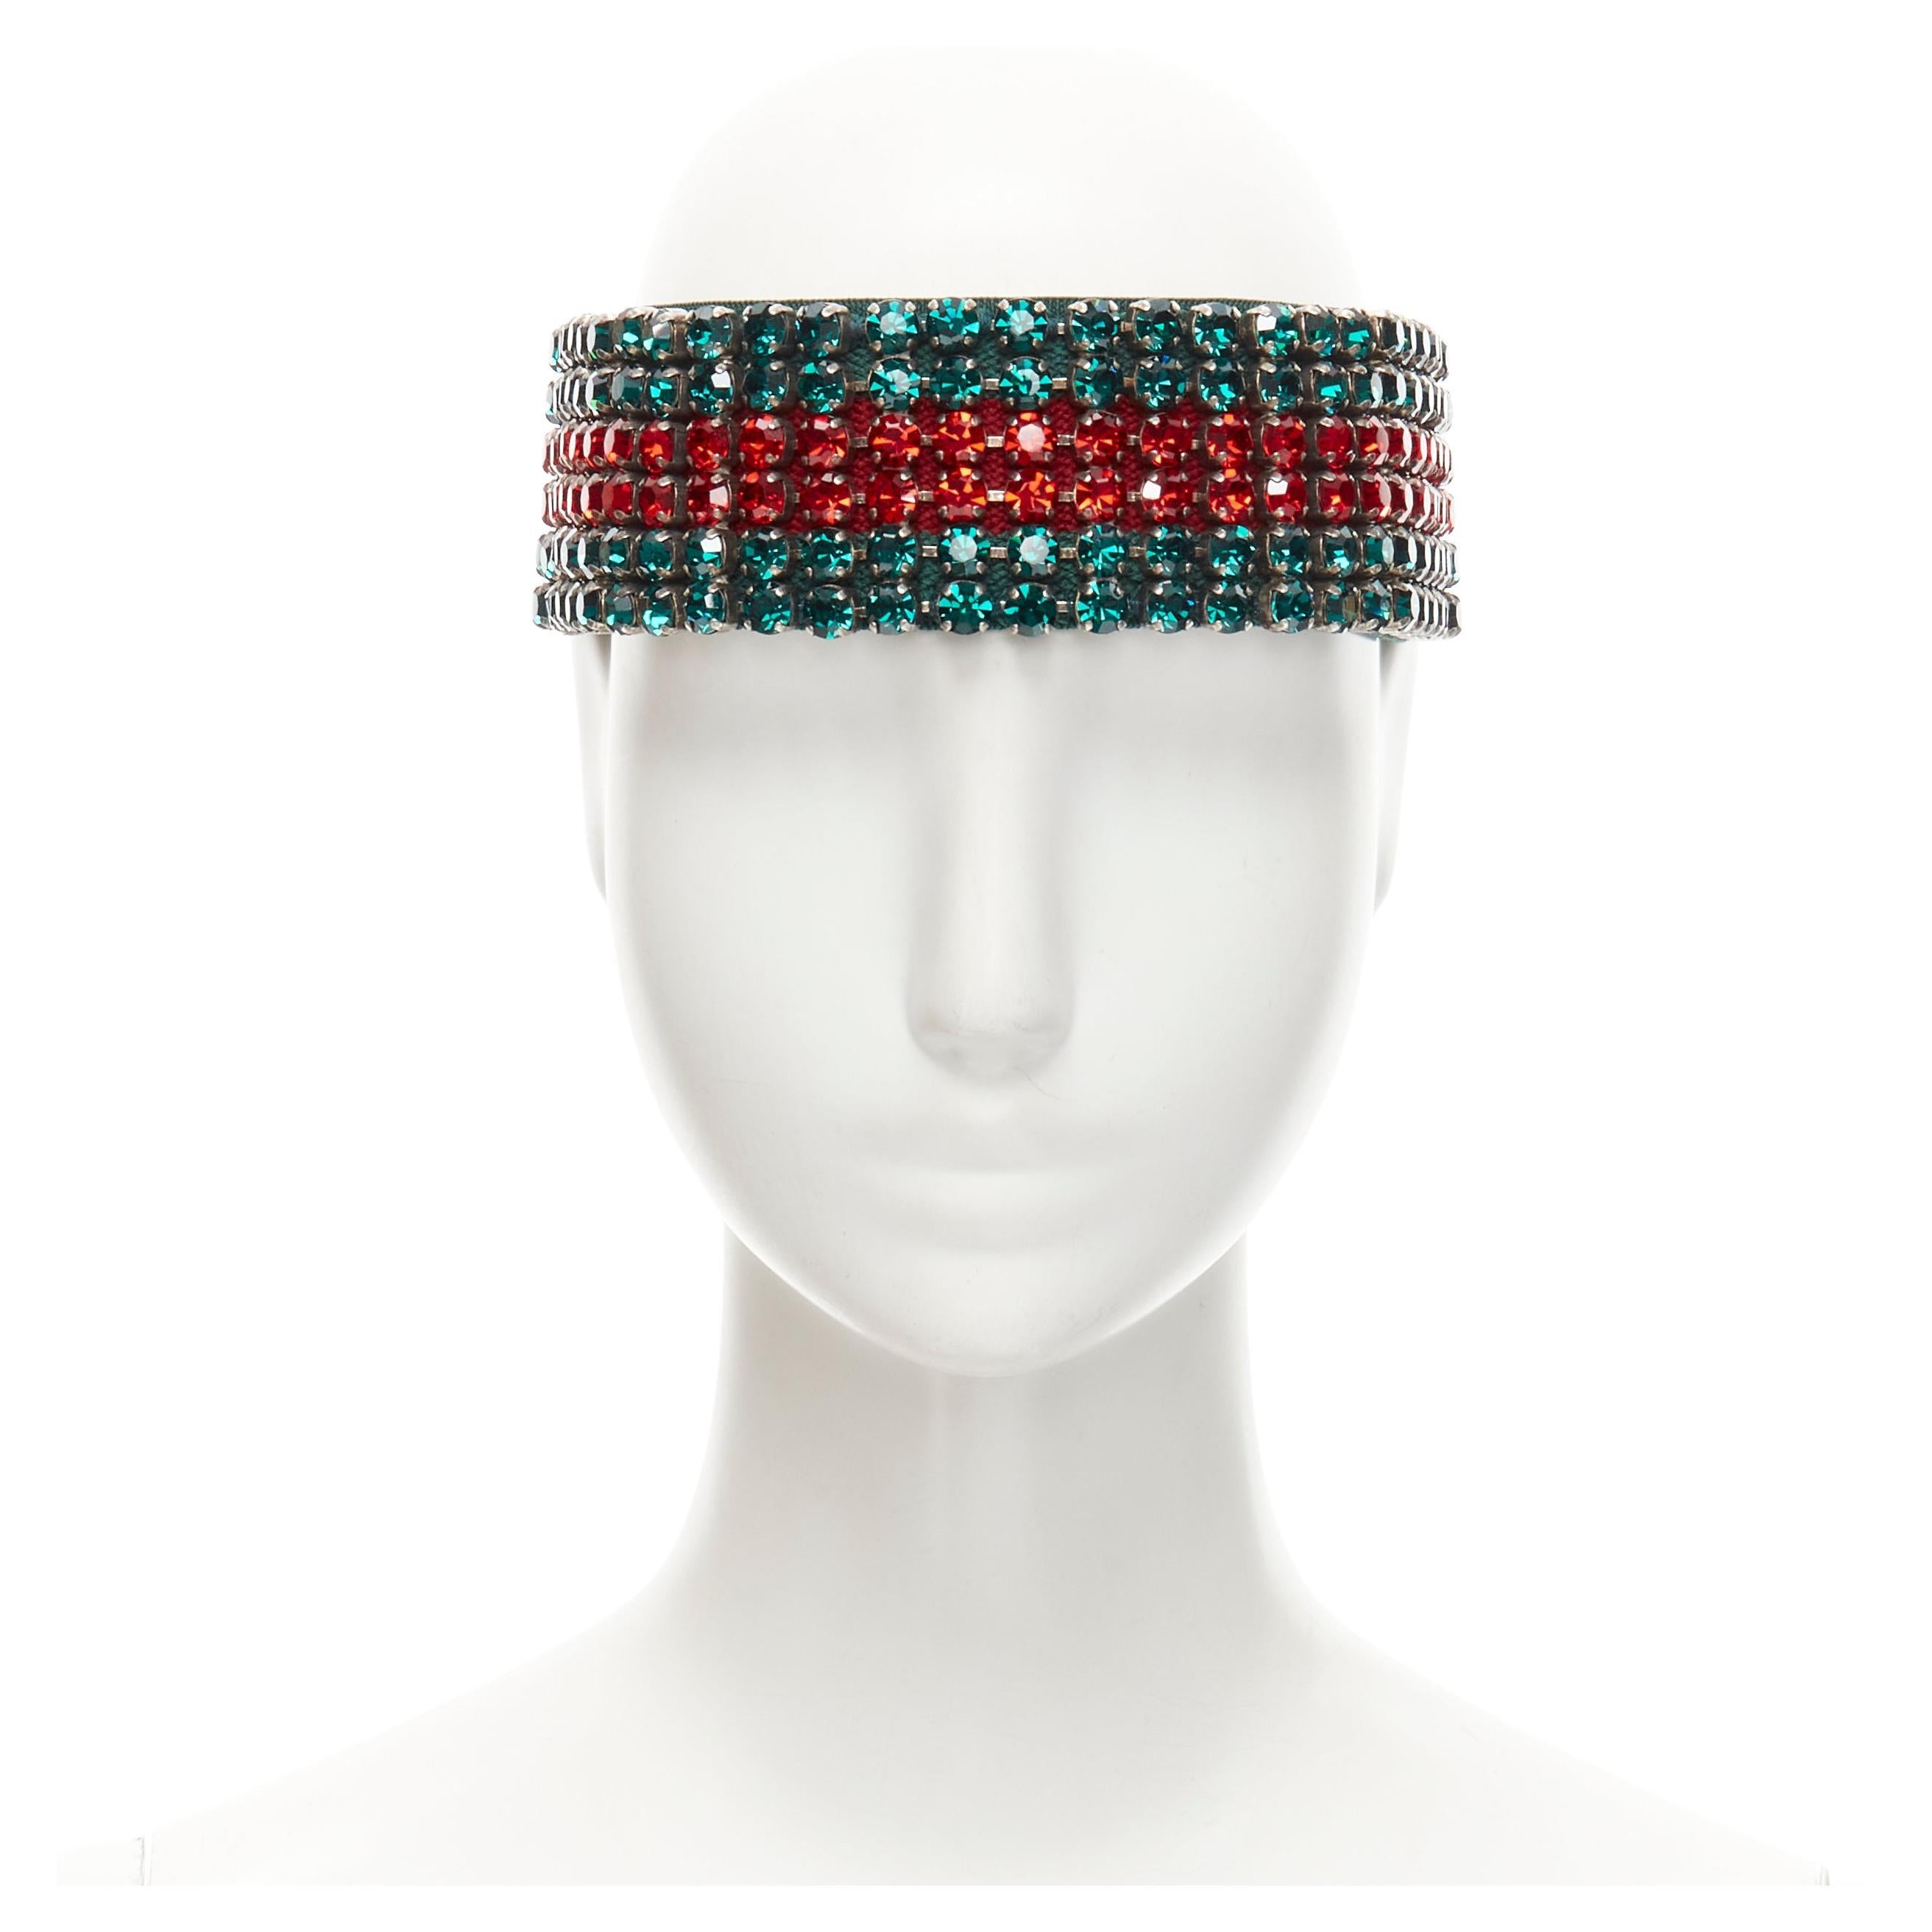 new GUCCI Webby Headband rhinestone crystal encrusted green red web headband